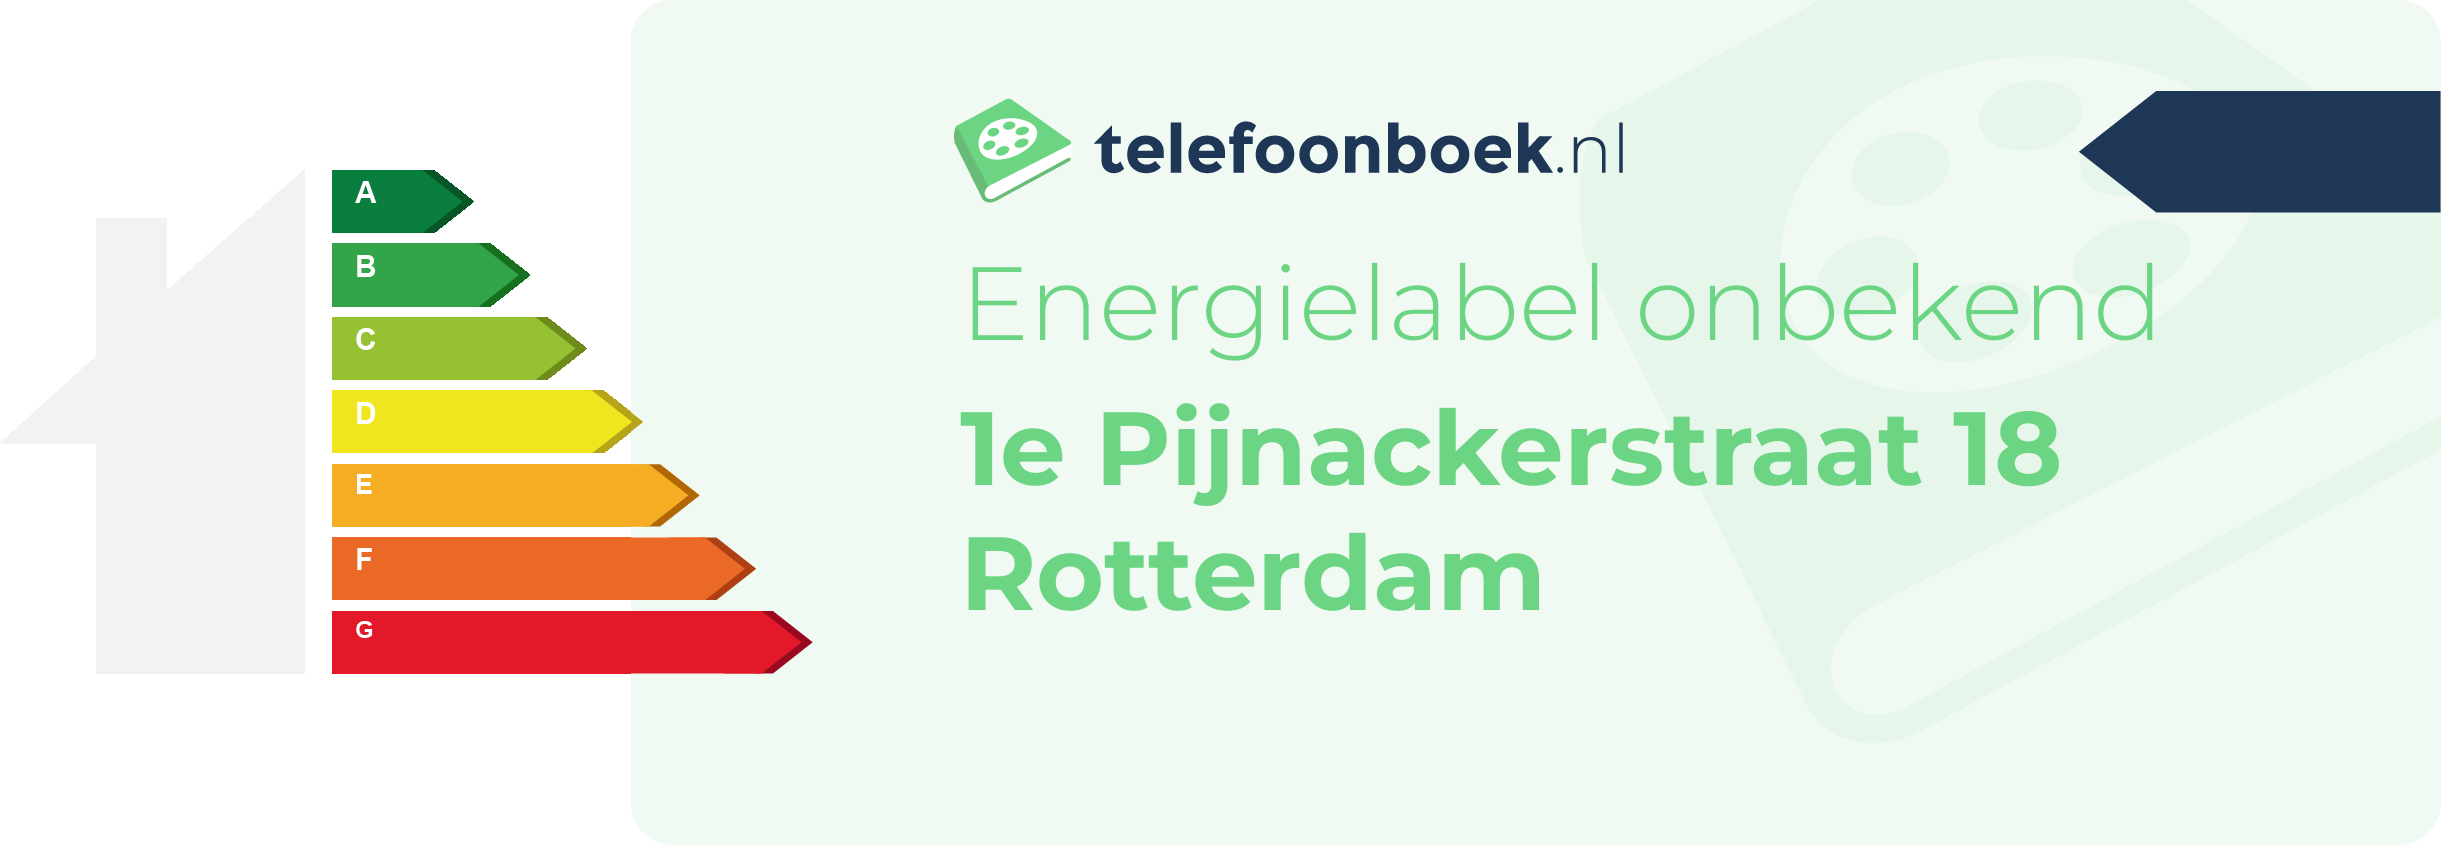 Energielabel 1e Pijnackerstraat 18 Rotterdam